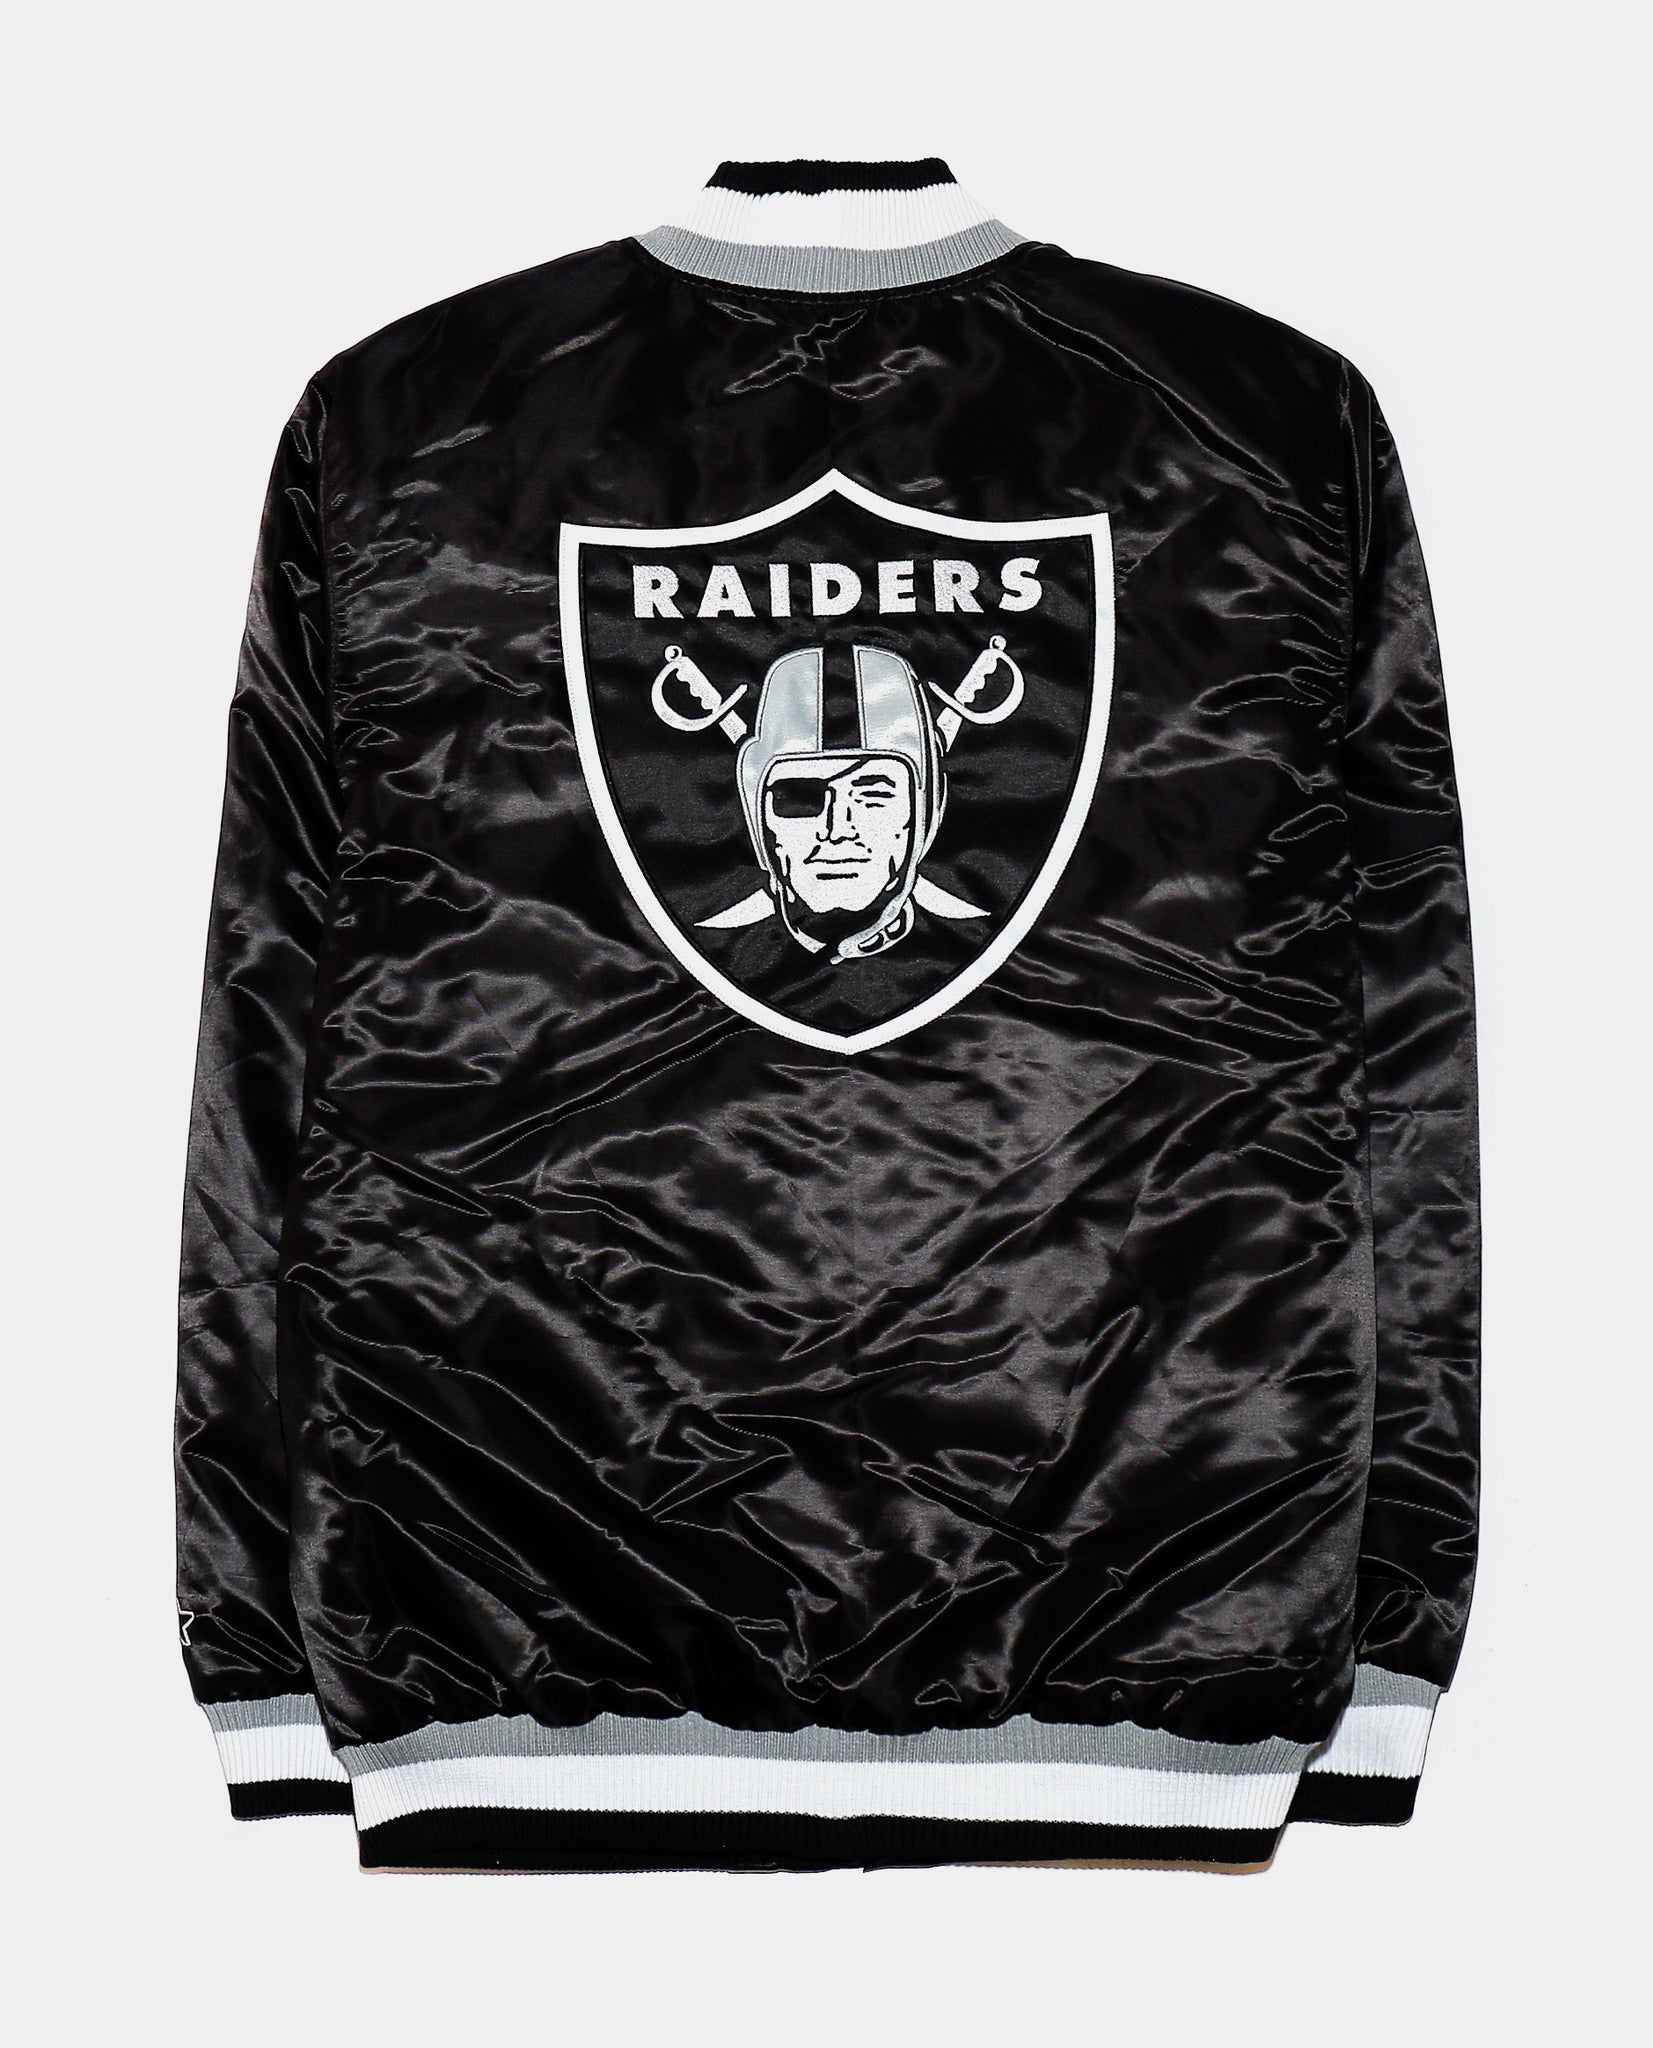 NFL Oakland Las Vegas Raiders Black Satin Varsity Jacket Embroidery logos